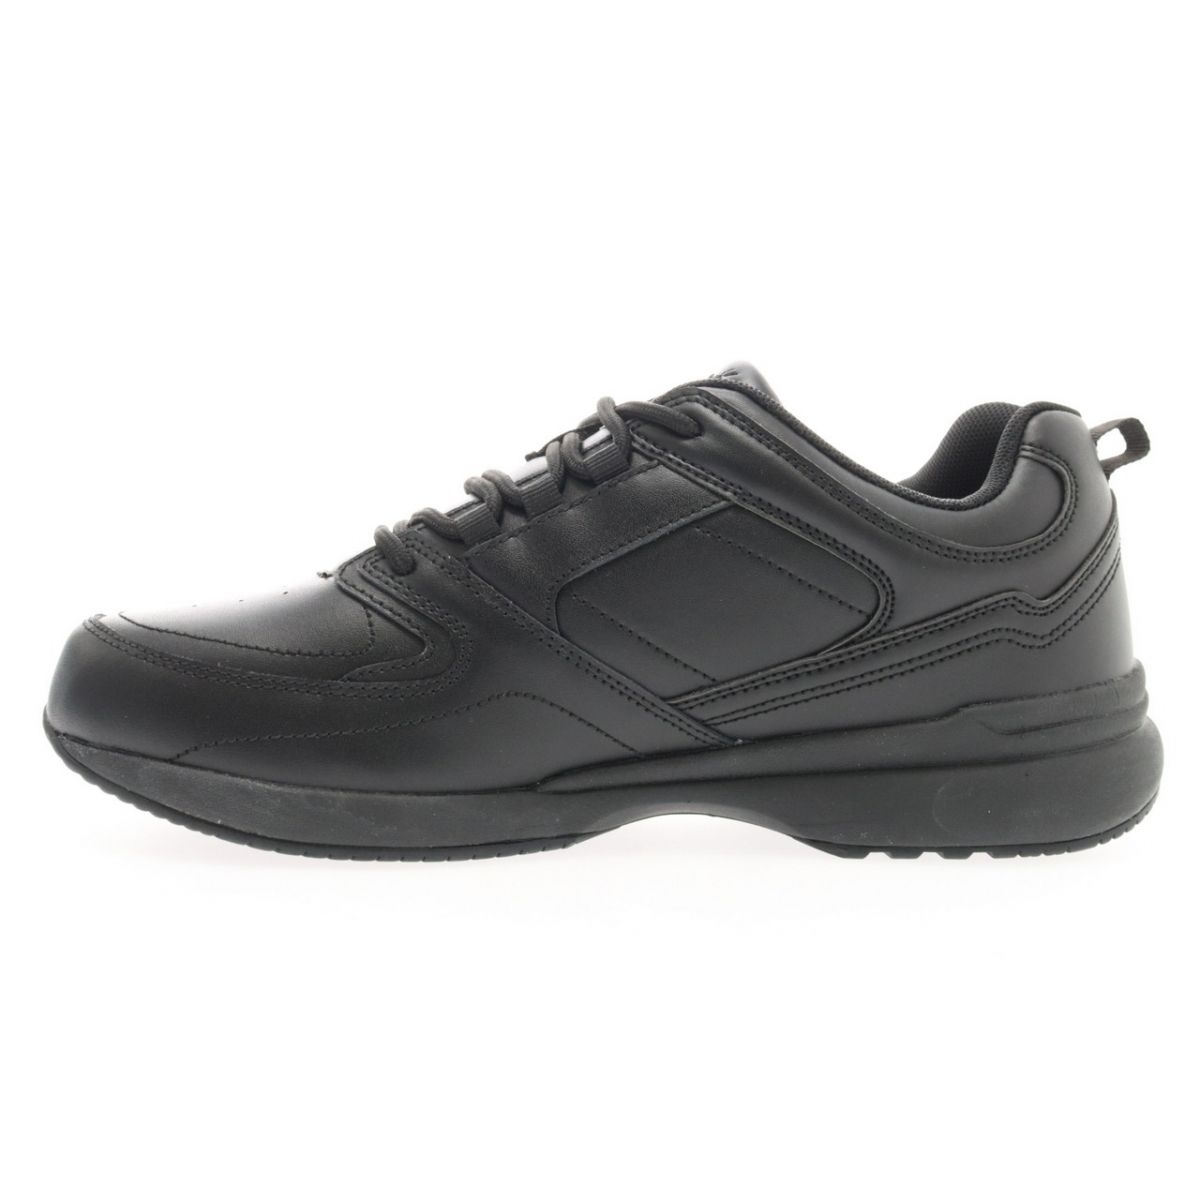 Propet Men's Life Walker Sport Sneaker Black - MAA272LBLK BLACK - BLACK, 15